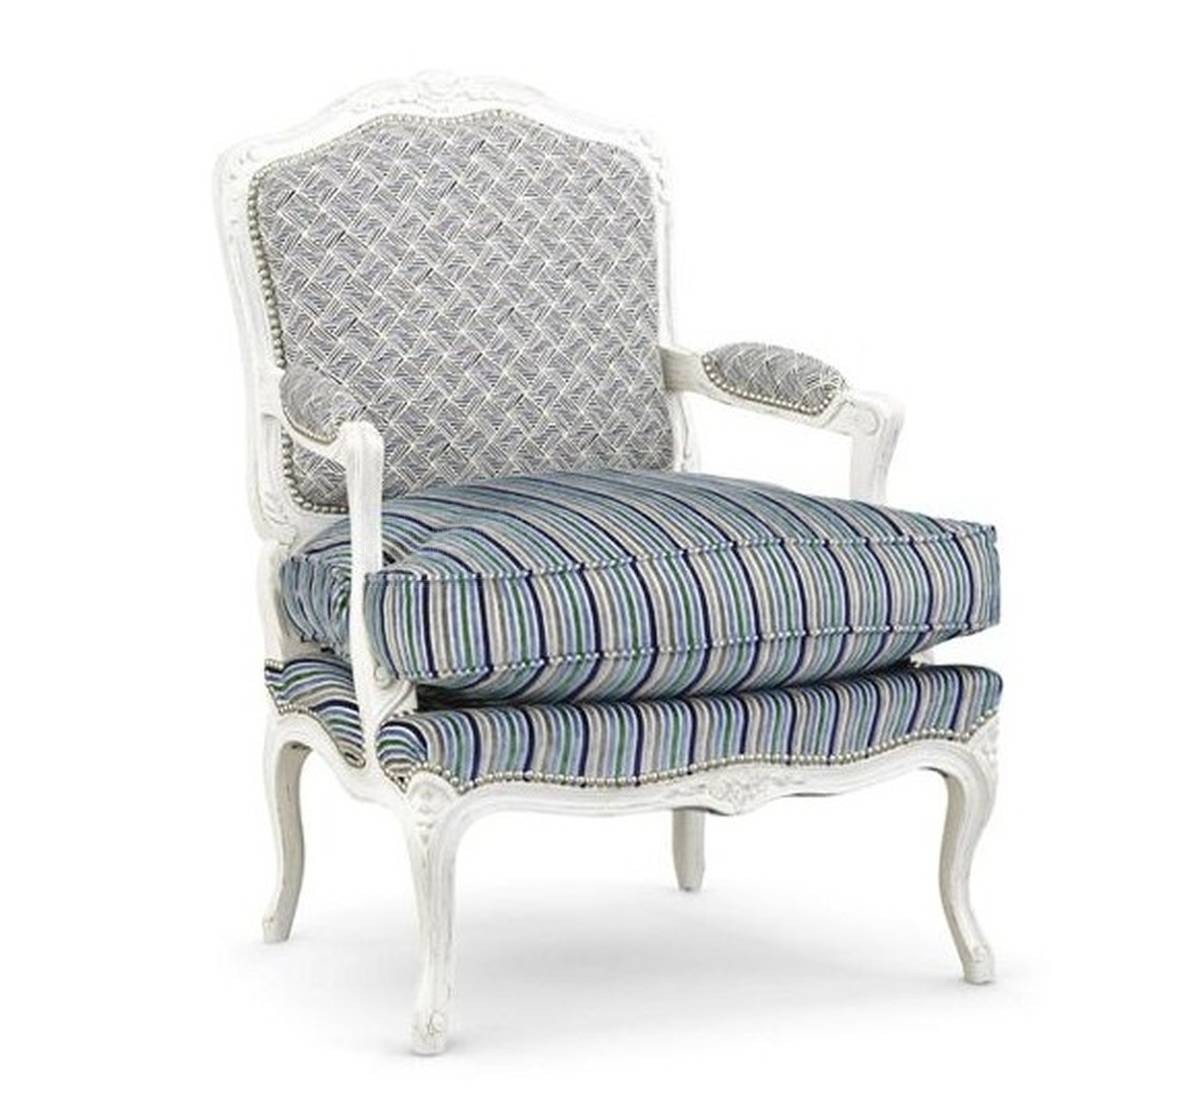 Полукресло Sultan armchair из Франции фабрики ROCHE BOBOIS